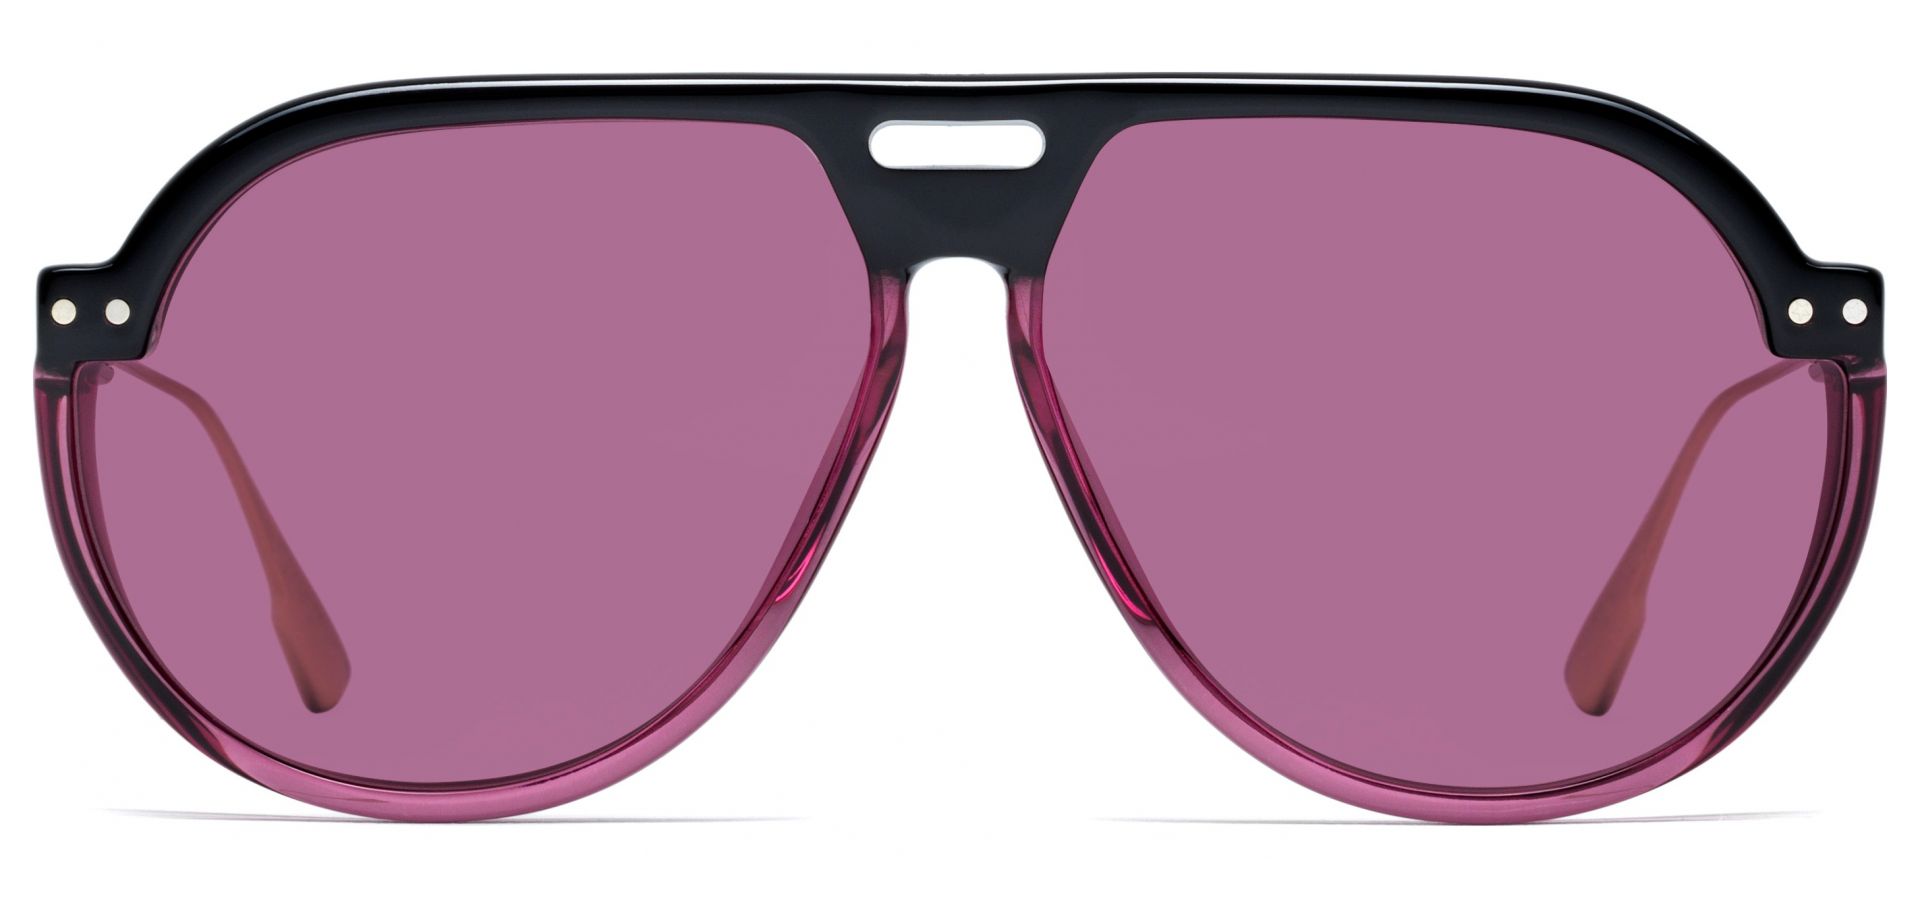 Sunčane naočale Christian Dior DIOR CLUB3: Boja: Black Pink, Veličina: 61/12/145, Spol: unisex, Materijal: acetat